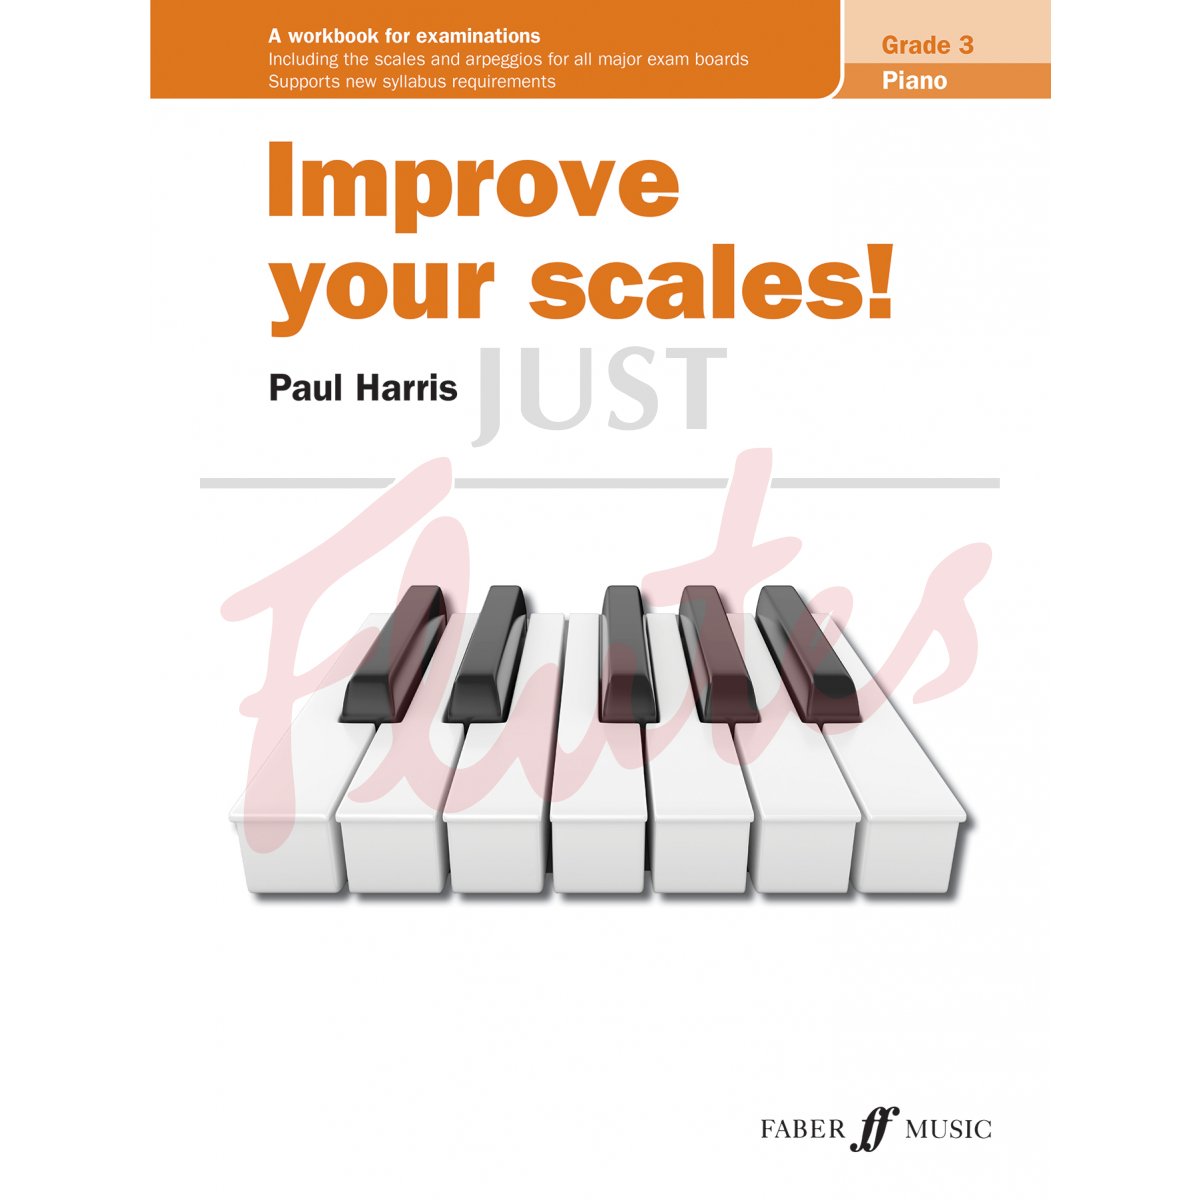 Improve Your Scales! [Piano] Grade 3